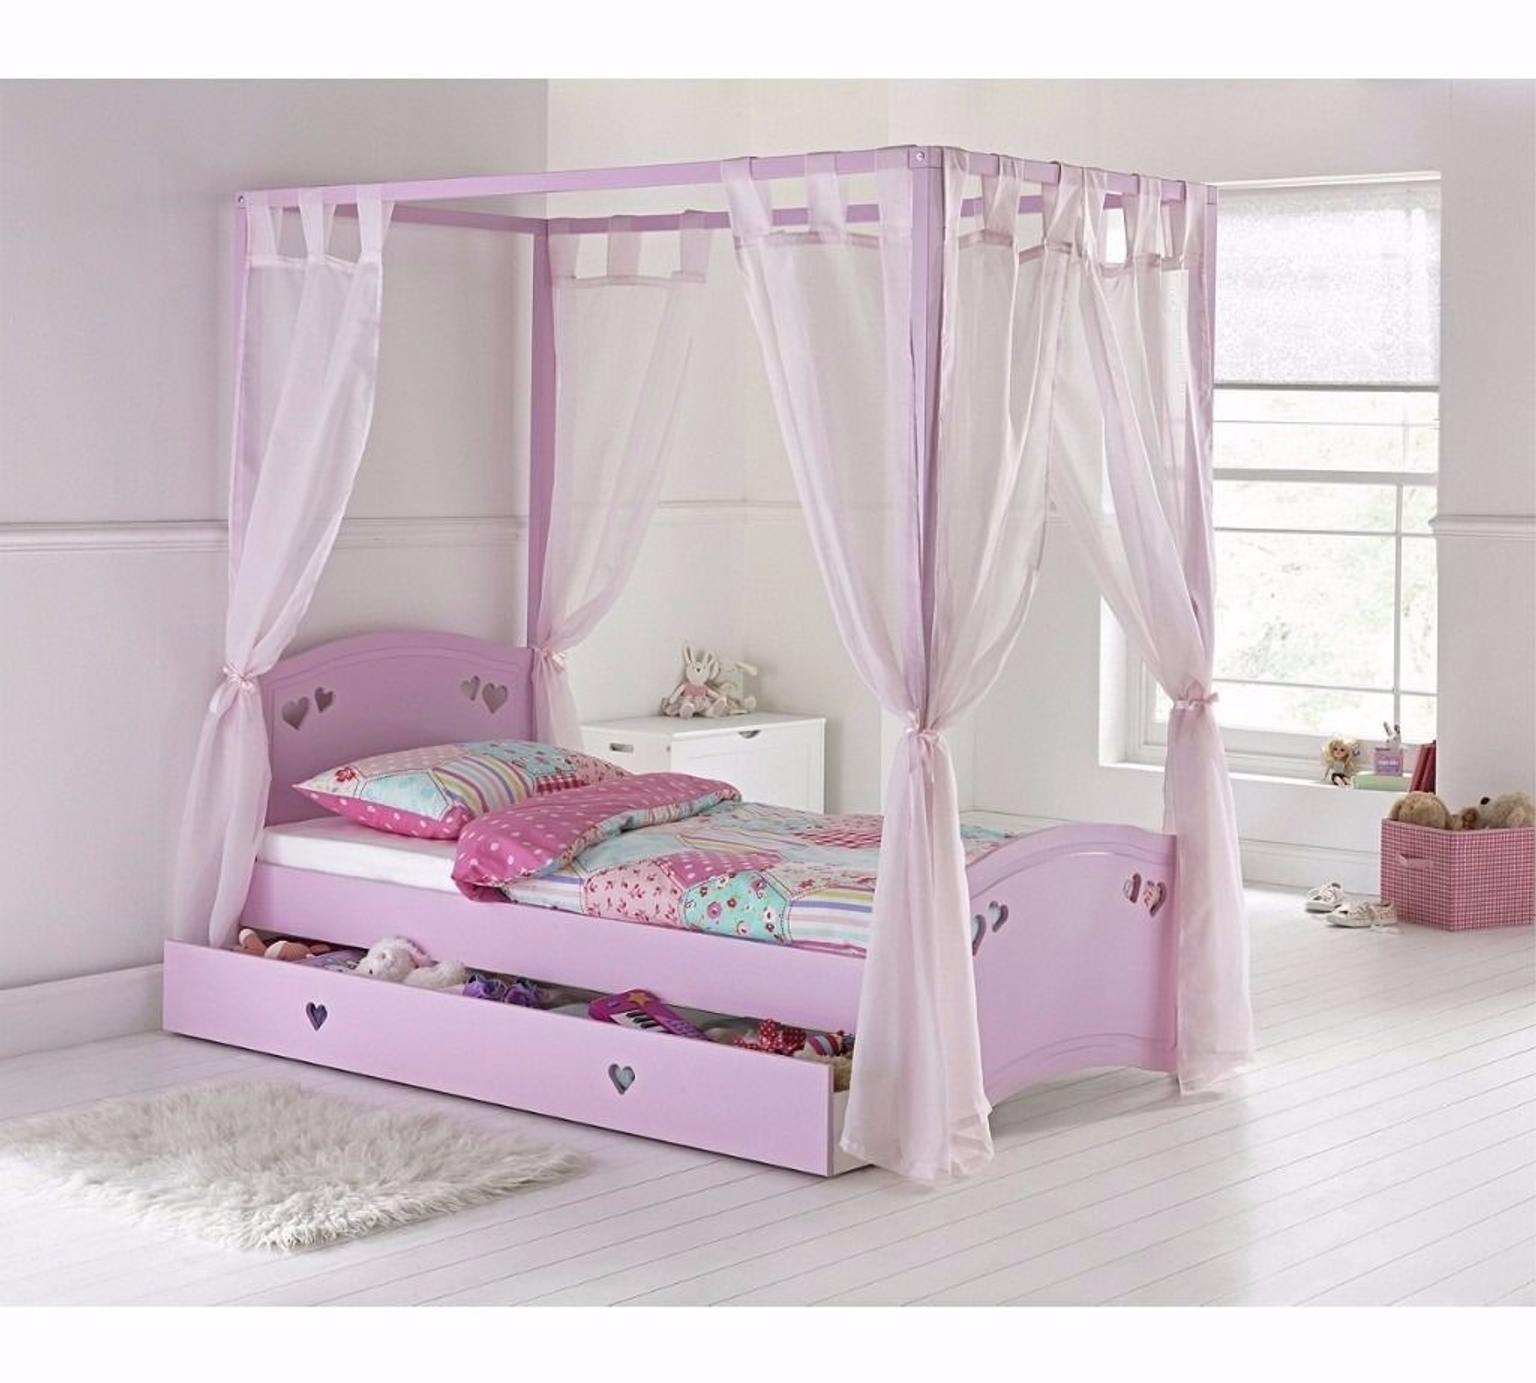 4 poster bed for little girl